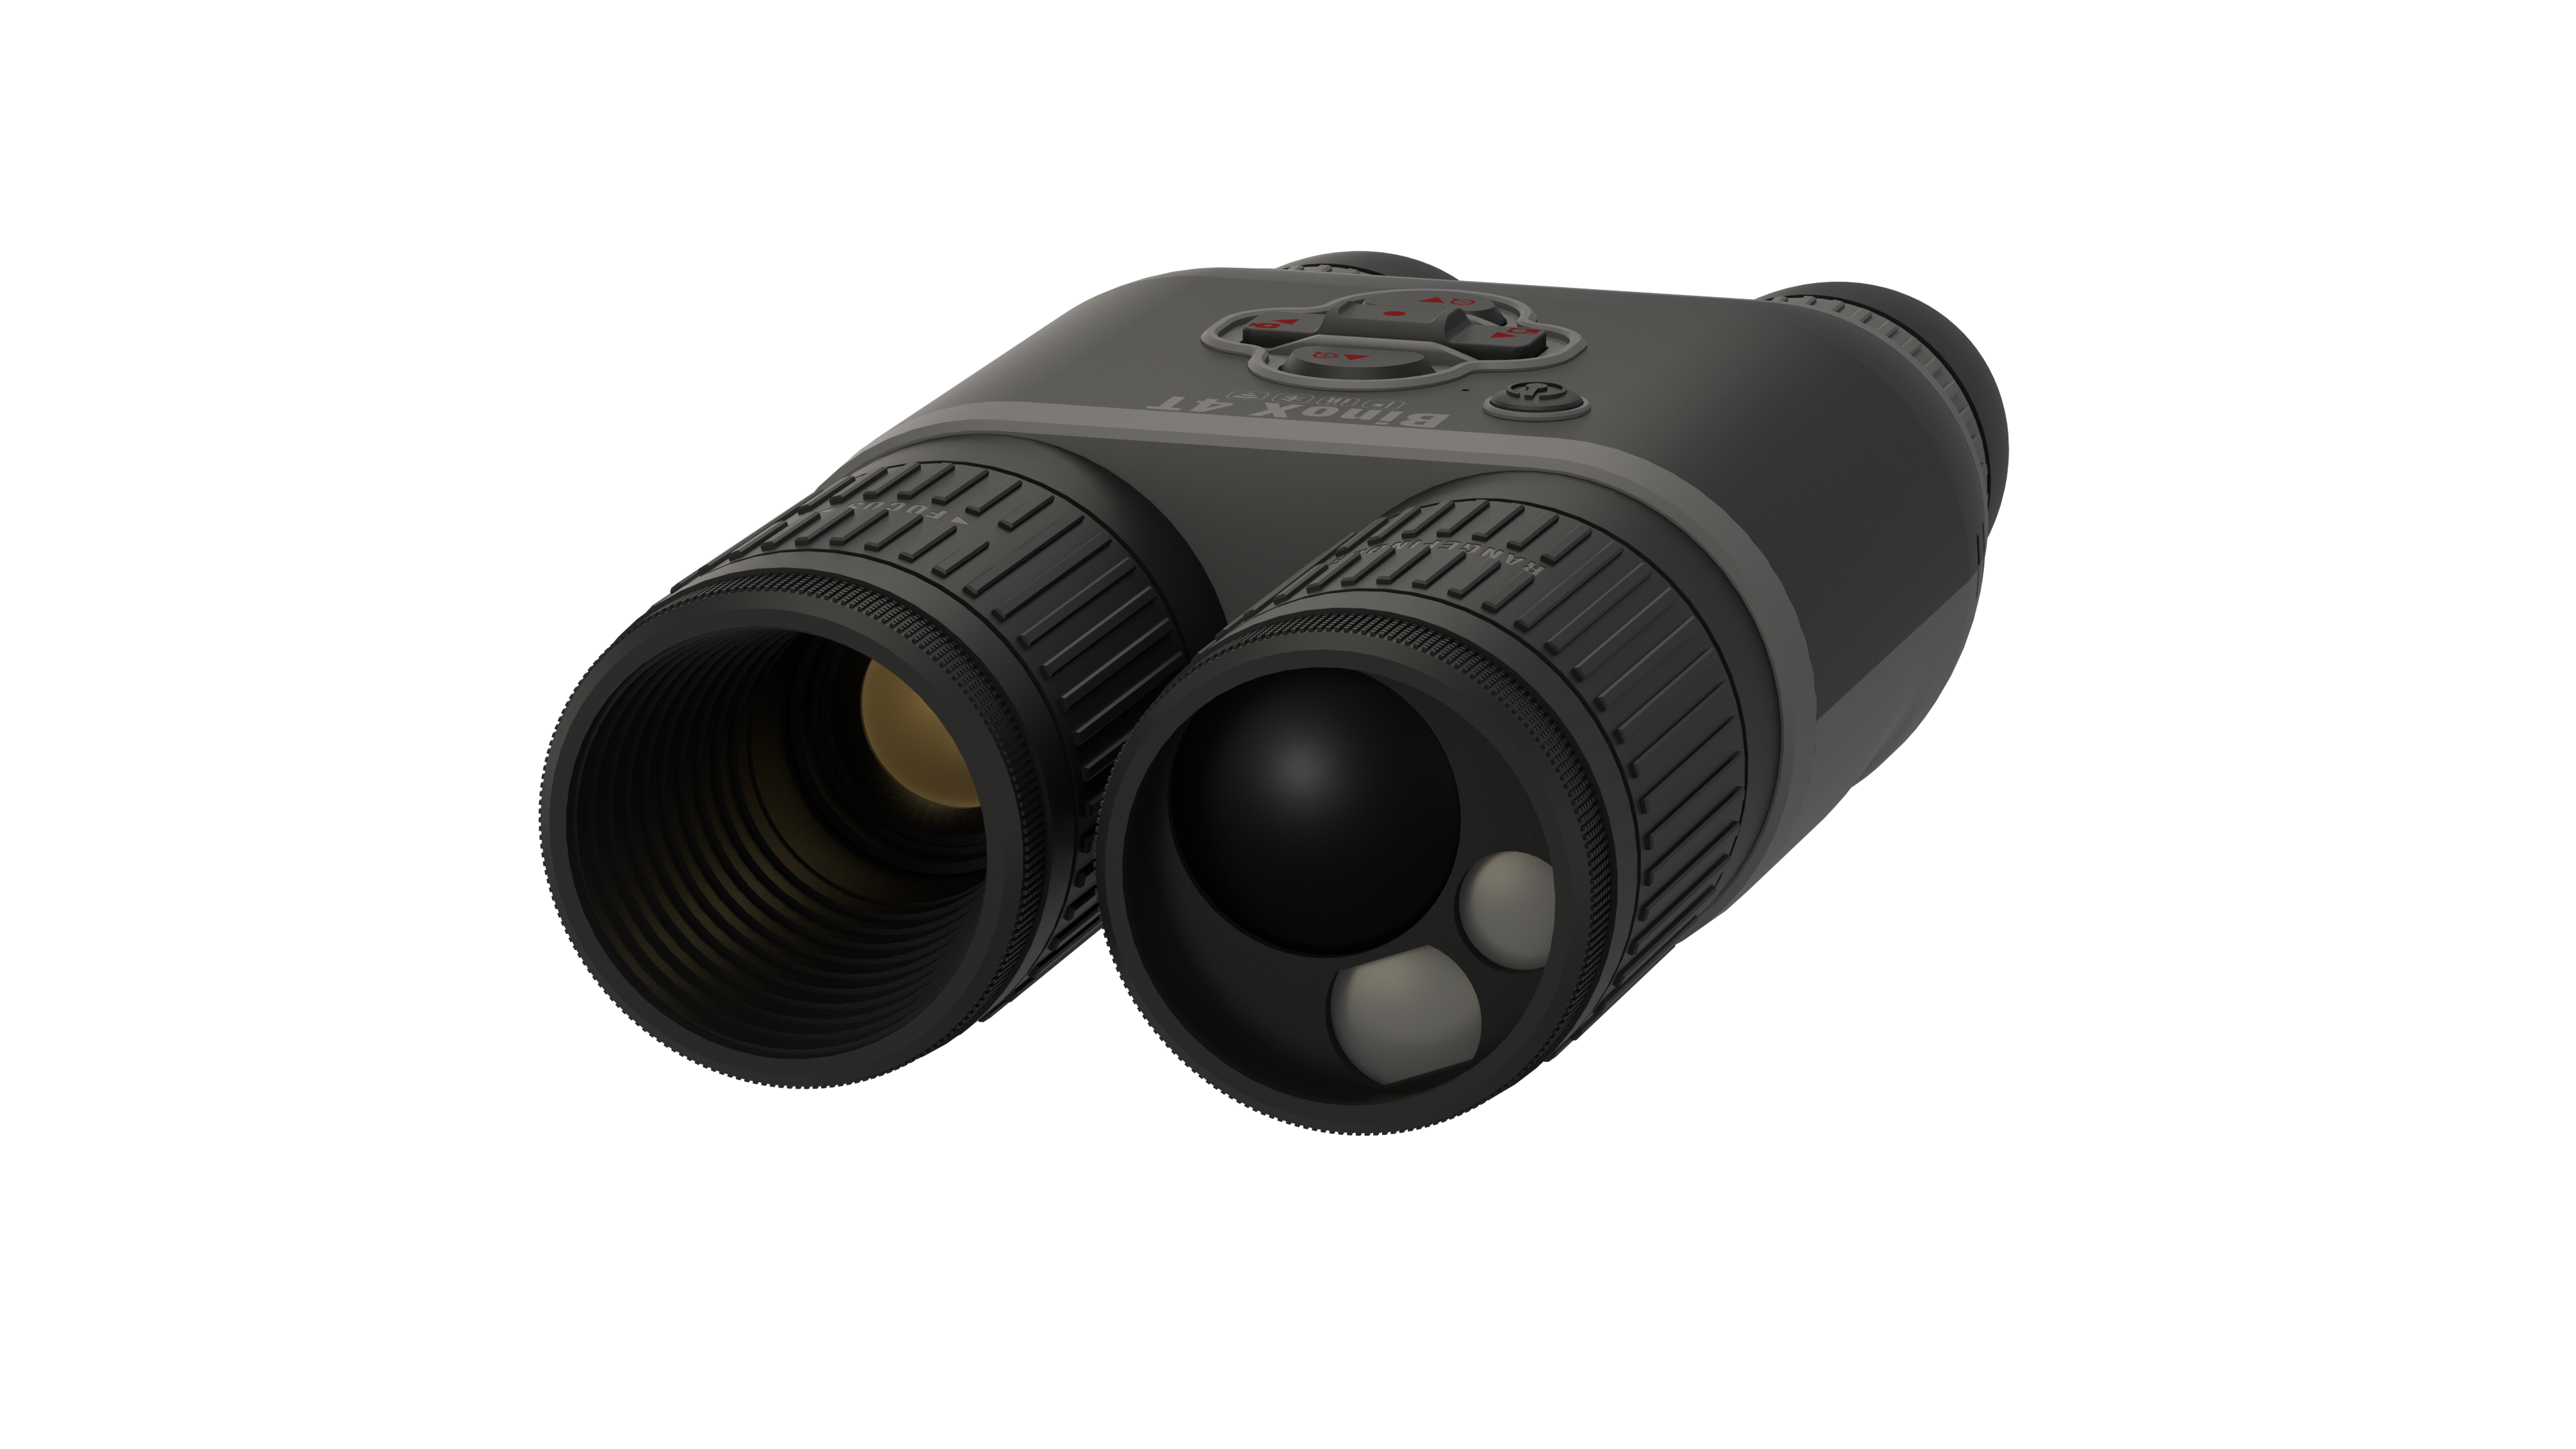 ATN Thermal Binocular BinoX 4T 384x288